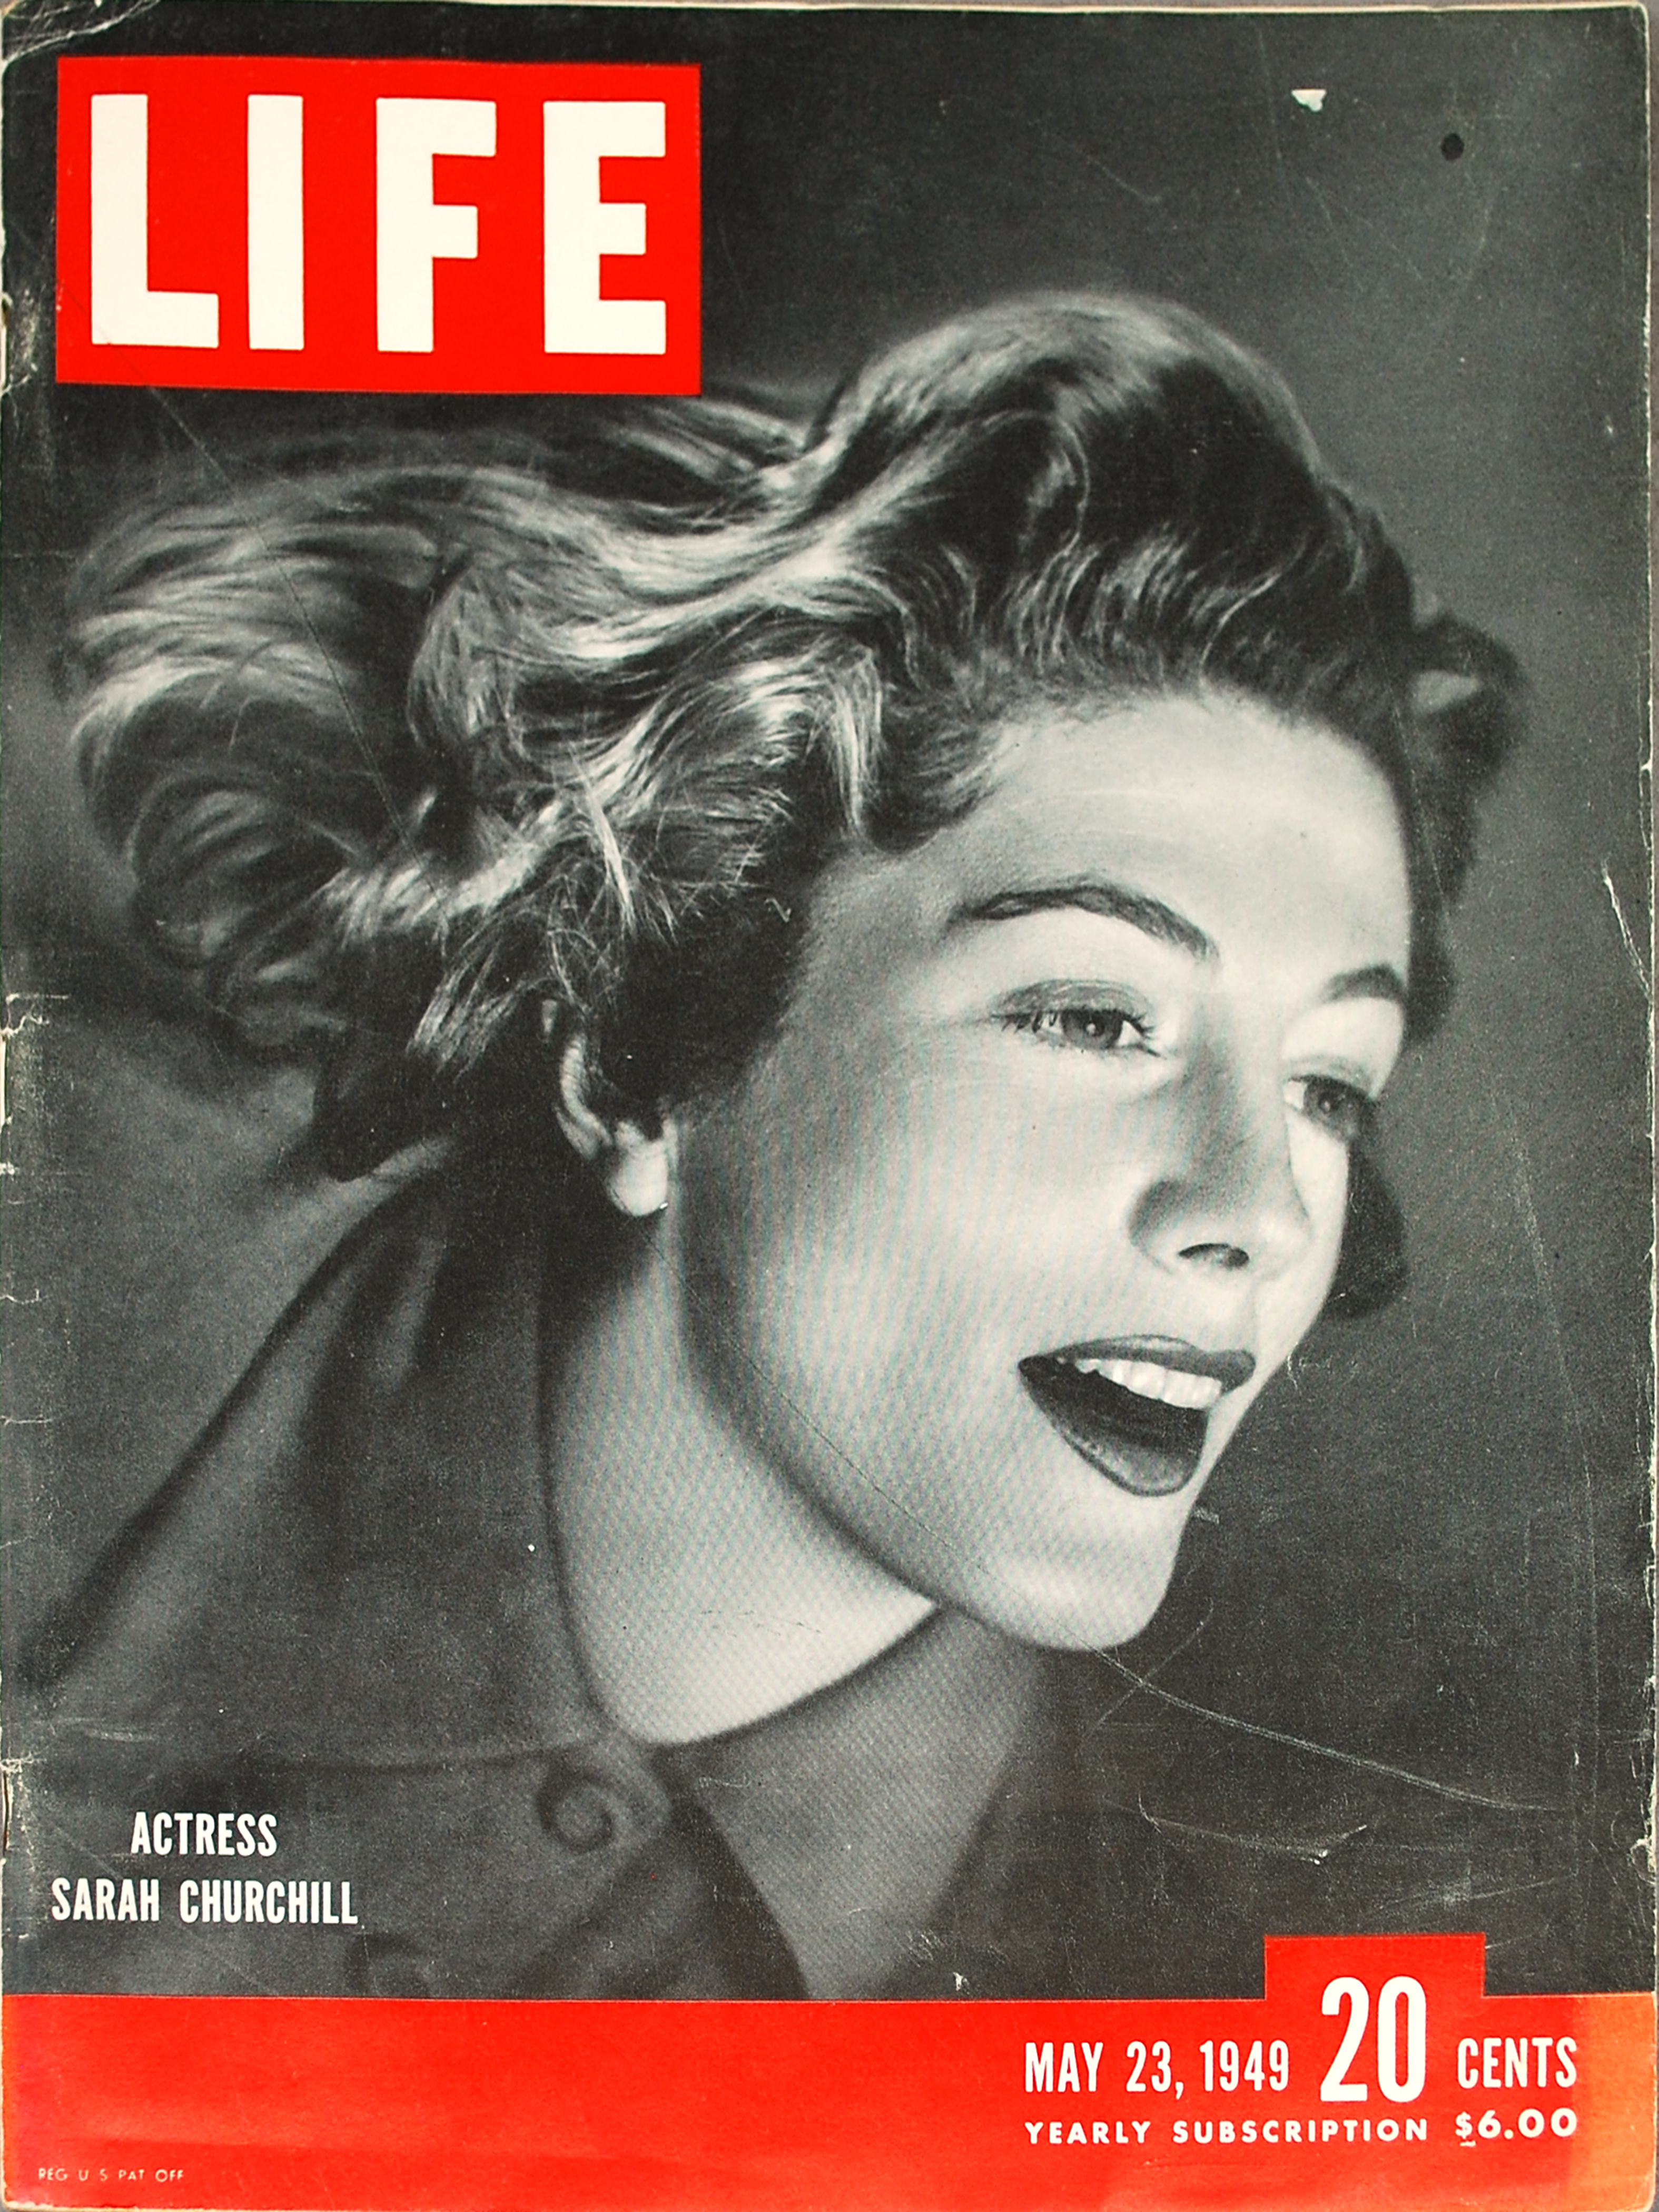 Object: Magazine (LIFE Magazine (Actress Sarah Churchill))